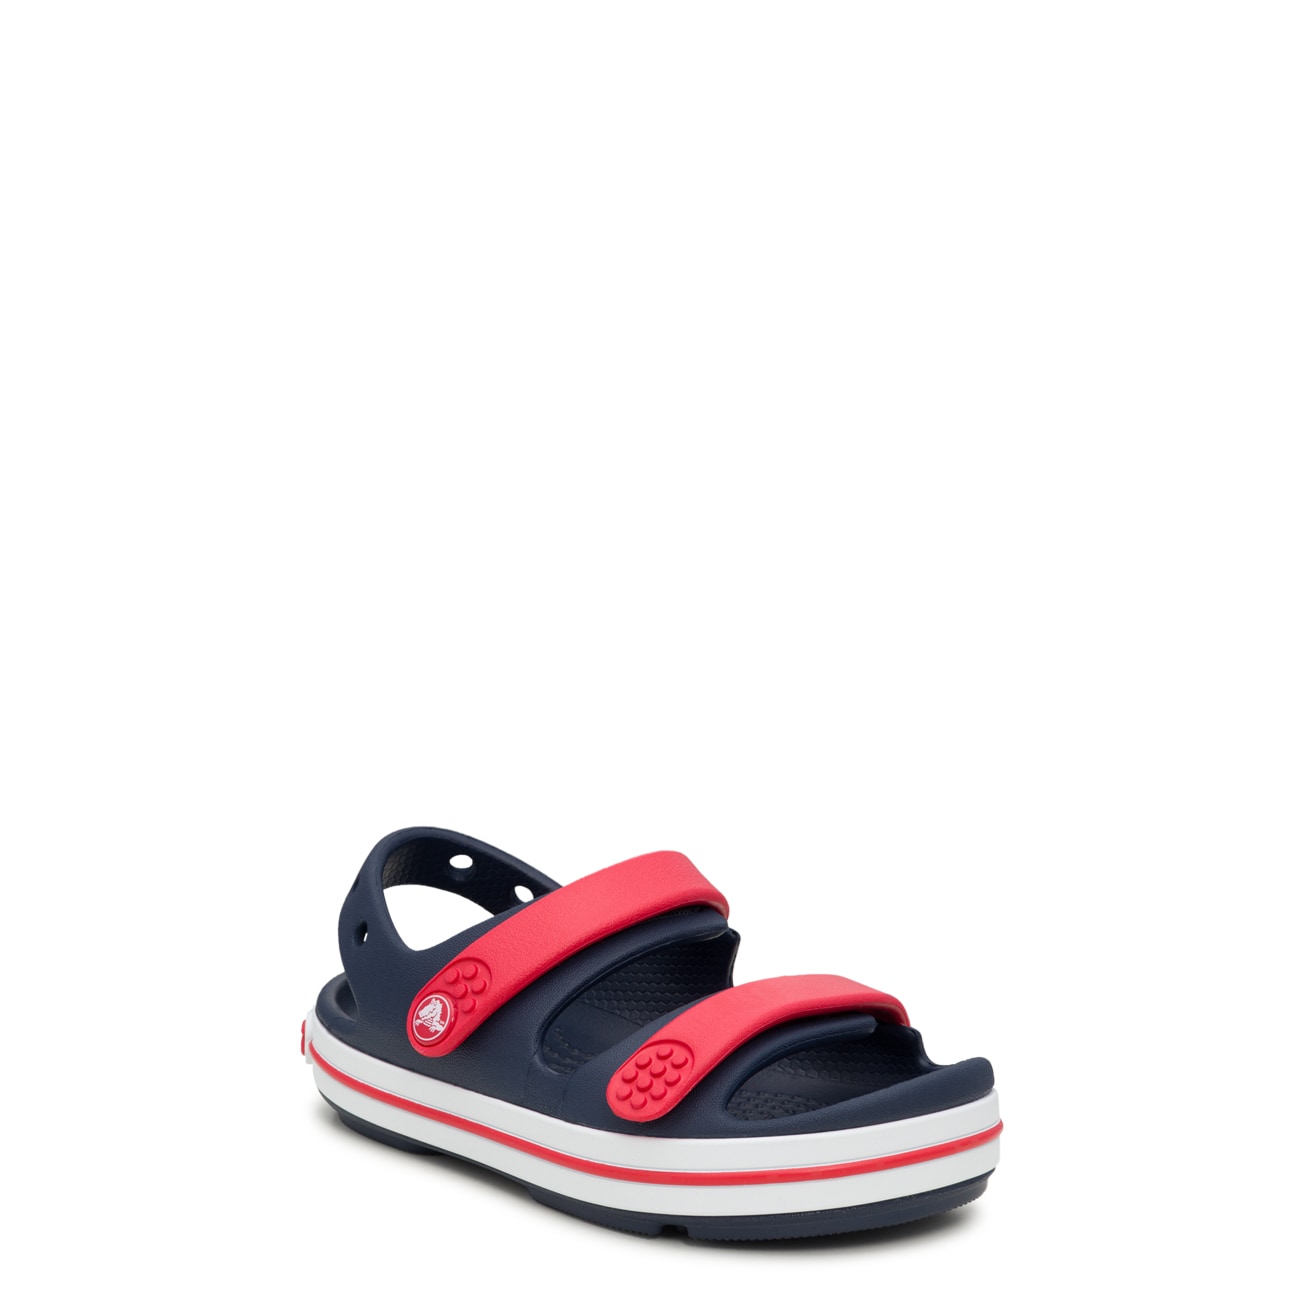 Toddler Boys' Crocband Cruiser Sandal